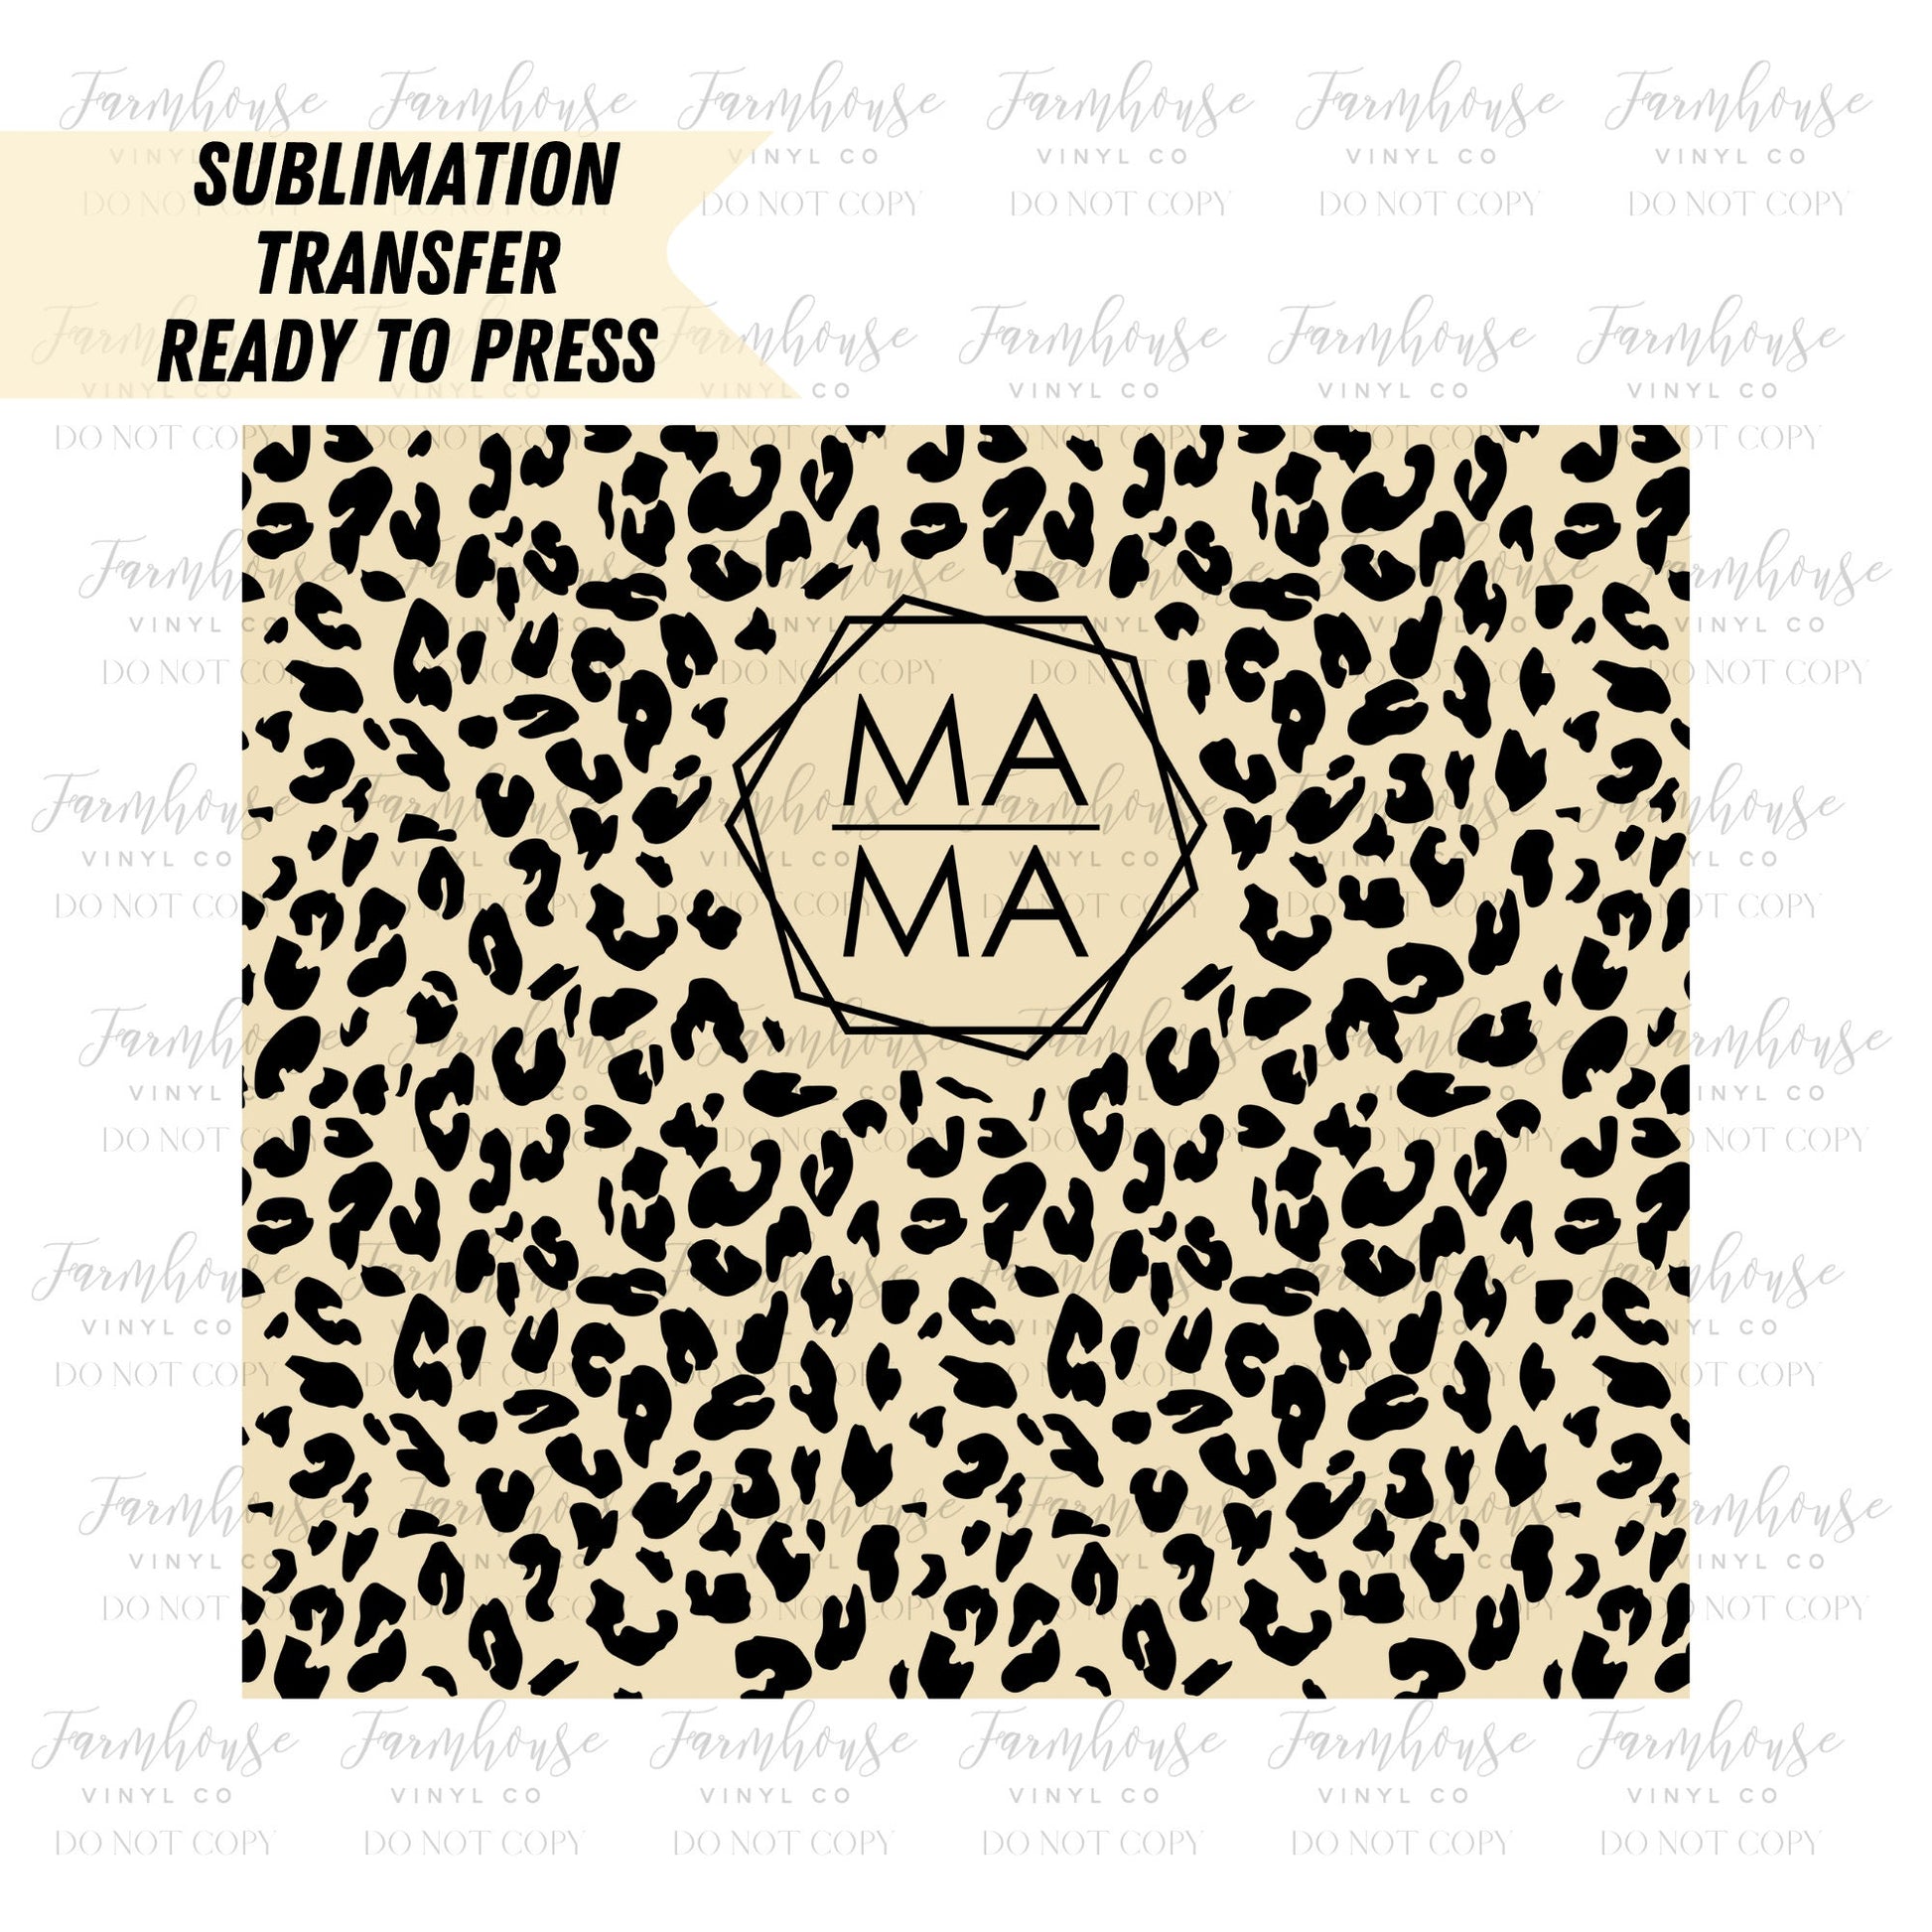 Leopard Mama Wrap, Tumbler Sublimation Transfer, Ready To Press, Heat Transfer, Skinny 20 OZ, Skinny 30 OZ, Mama Coffee Fuel Tumbler - Farmhouse Vinyl Co